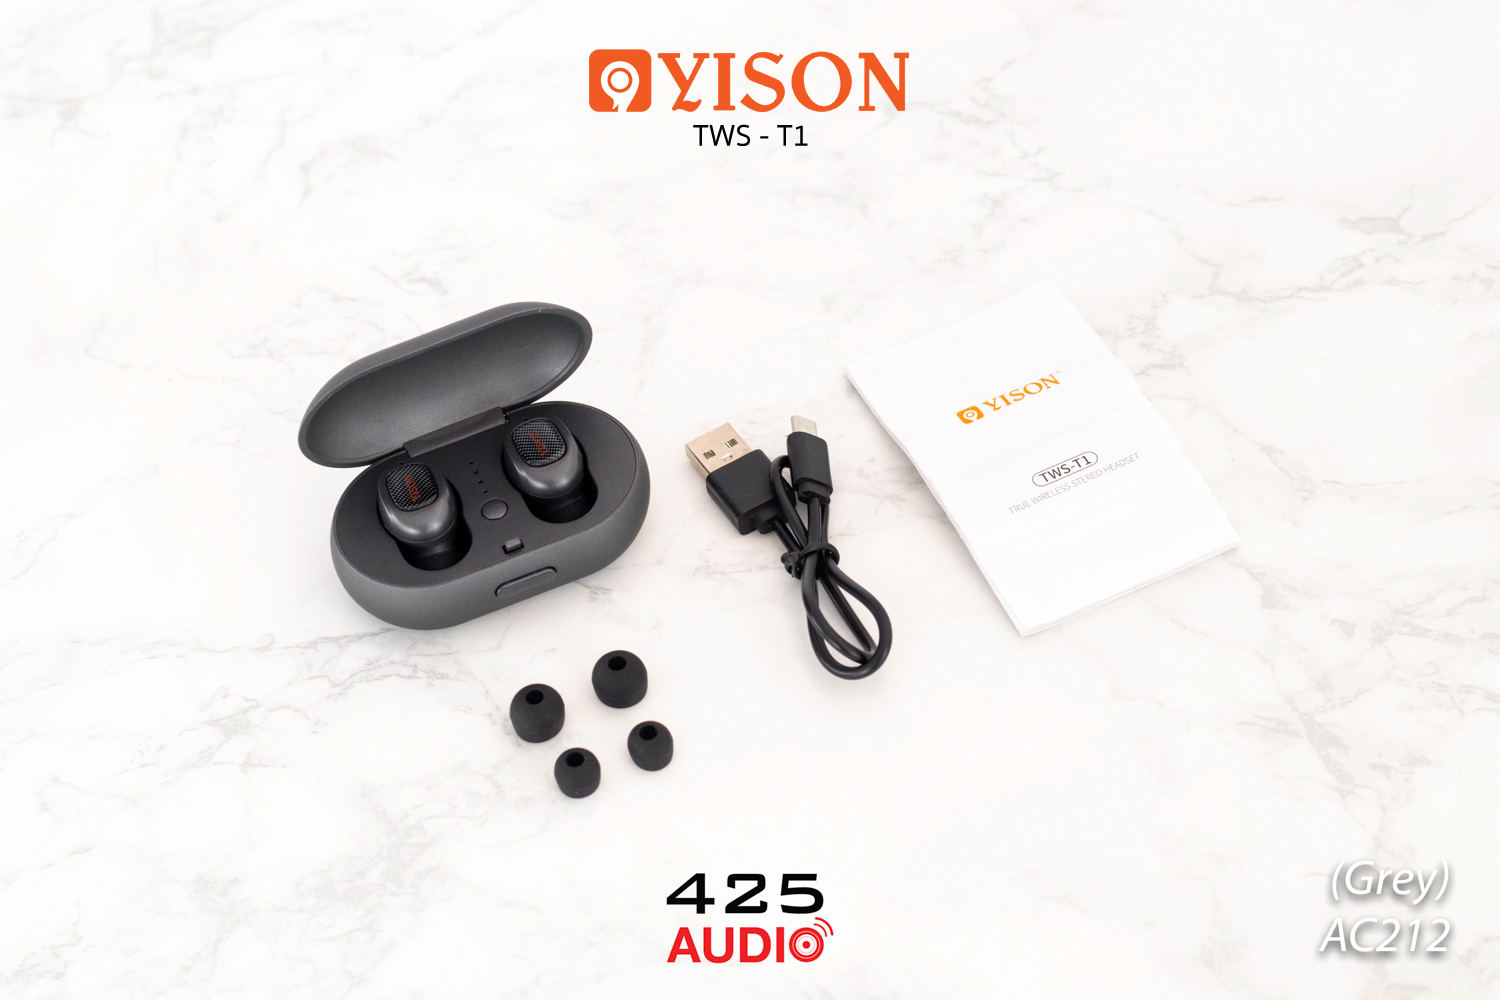 yison,twst1,earphone,stereo,mono,truewireless,mini,inexpensive,hifi,bluetooth5,headset,music,microphone,autopairing,chargingbox